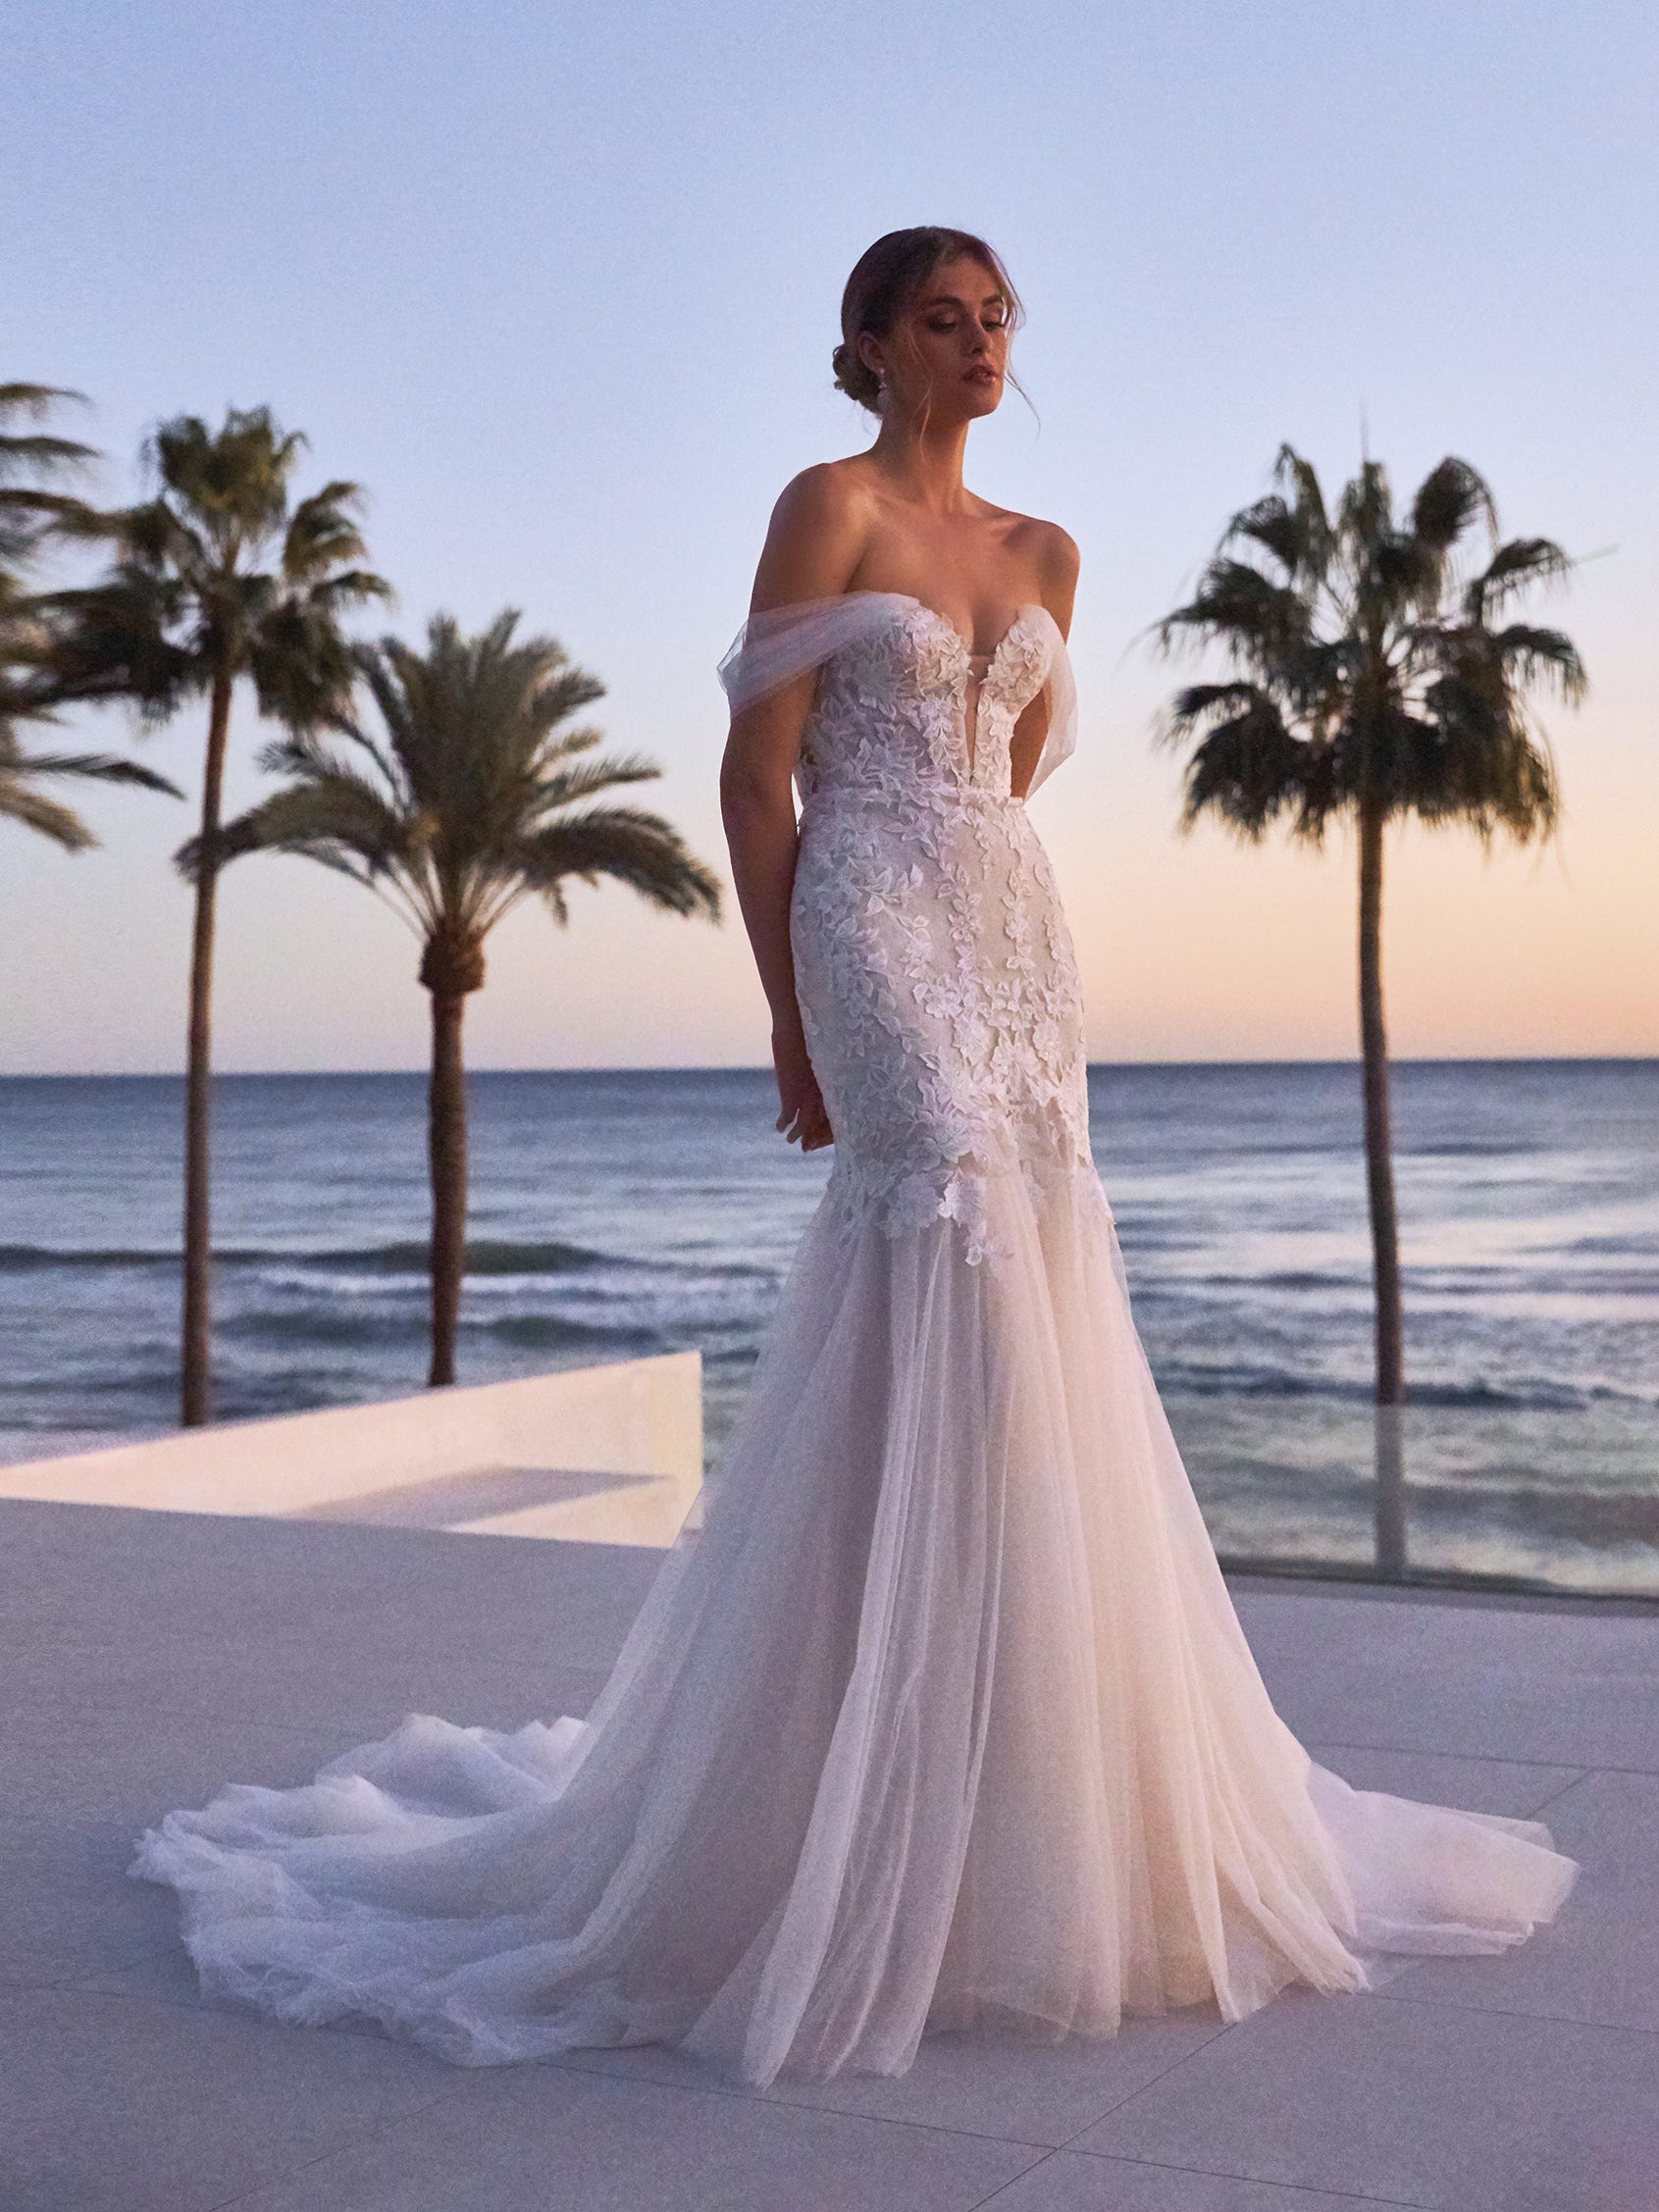 Boho Wedding Dresses Bridal Gown V-Neck Backless Lace Applique A Line  TullCustom | eBay